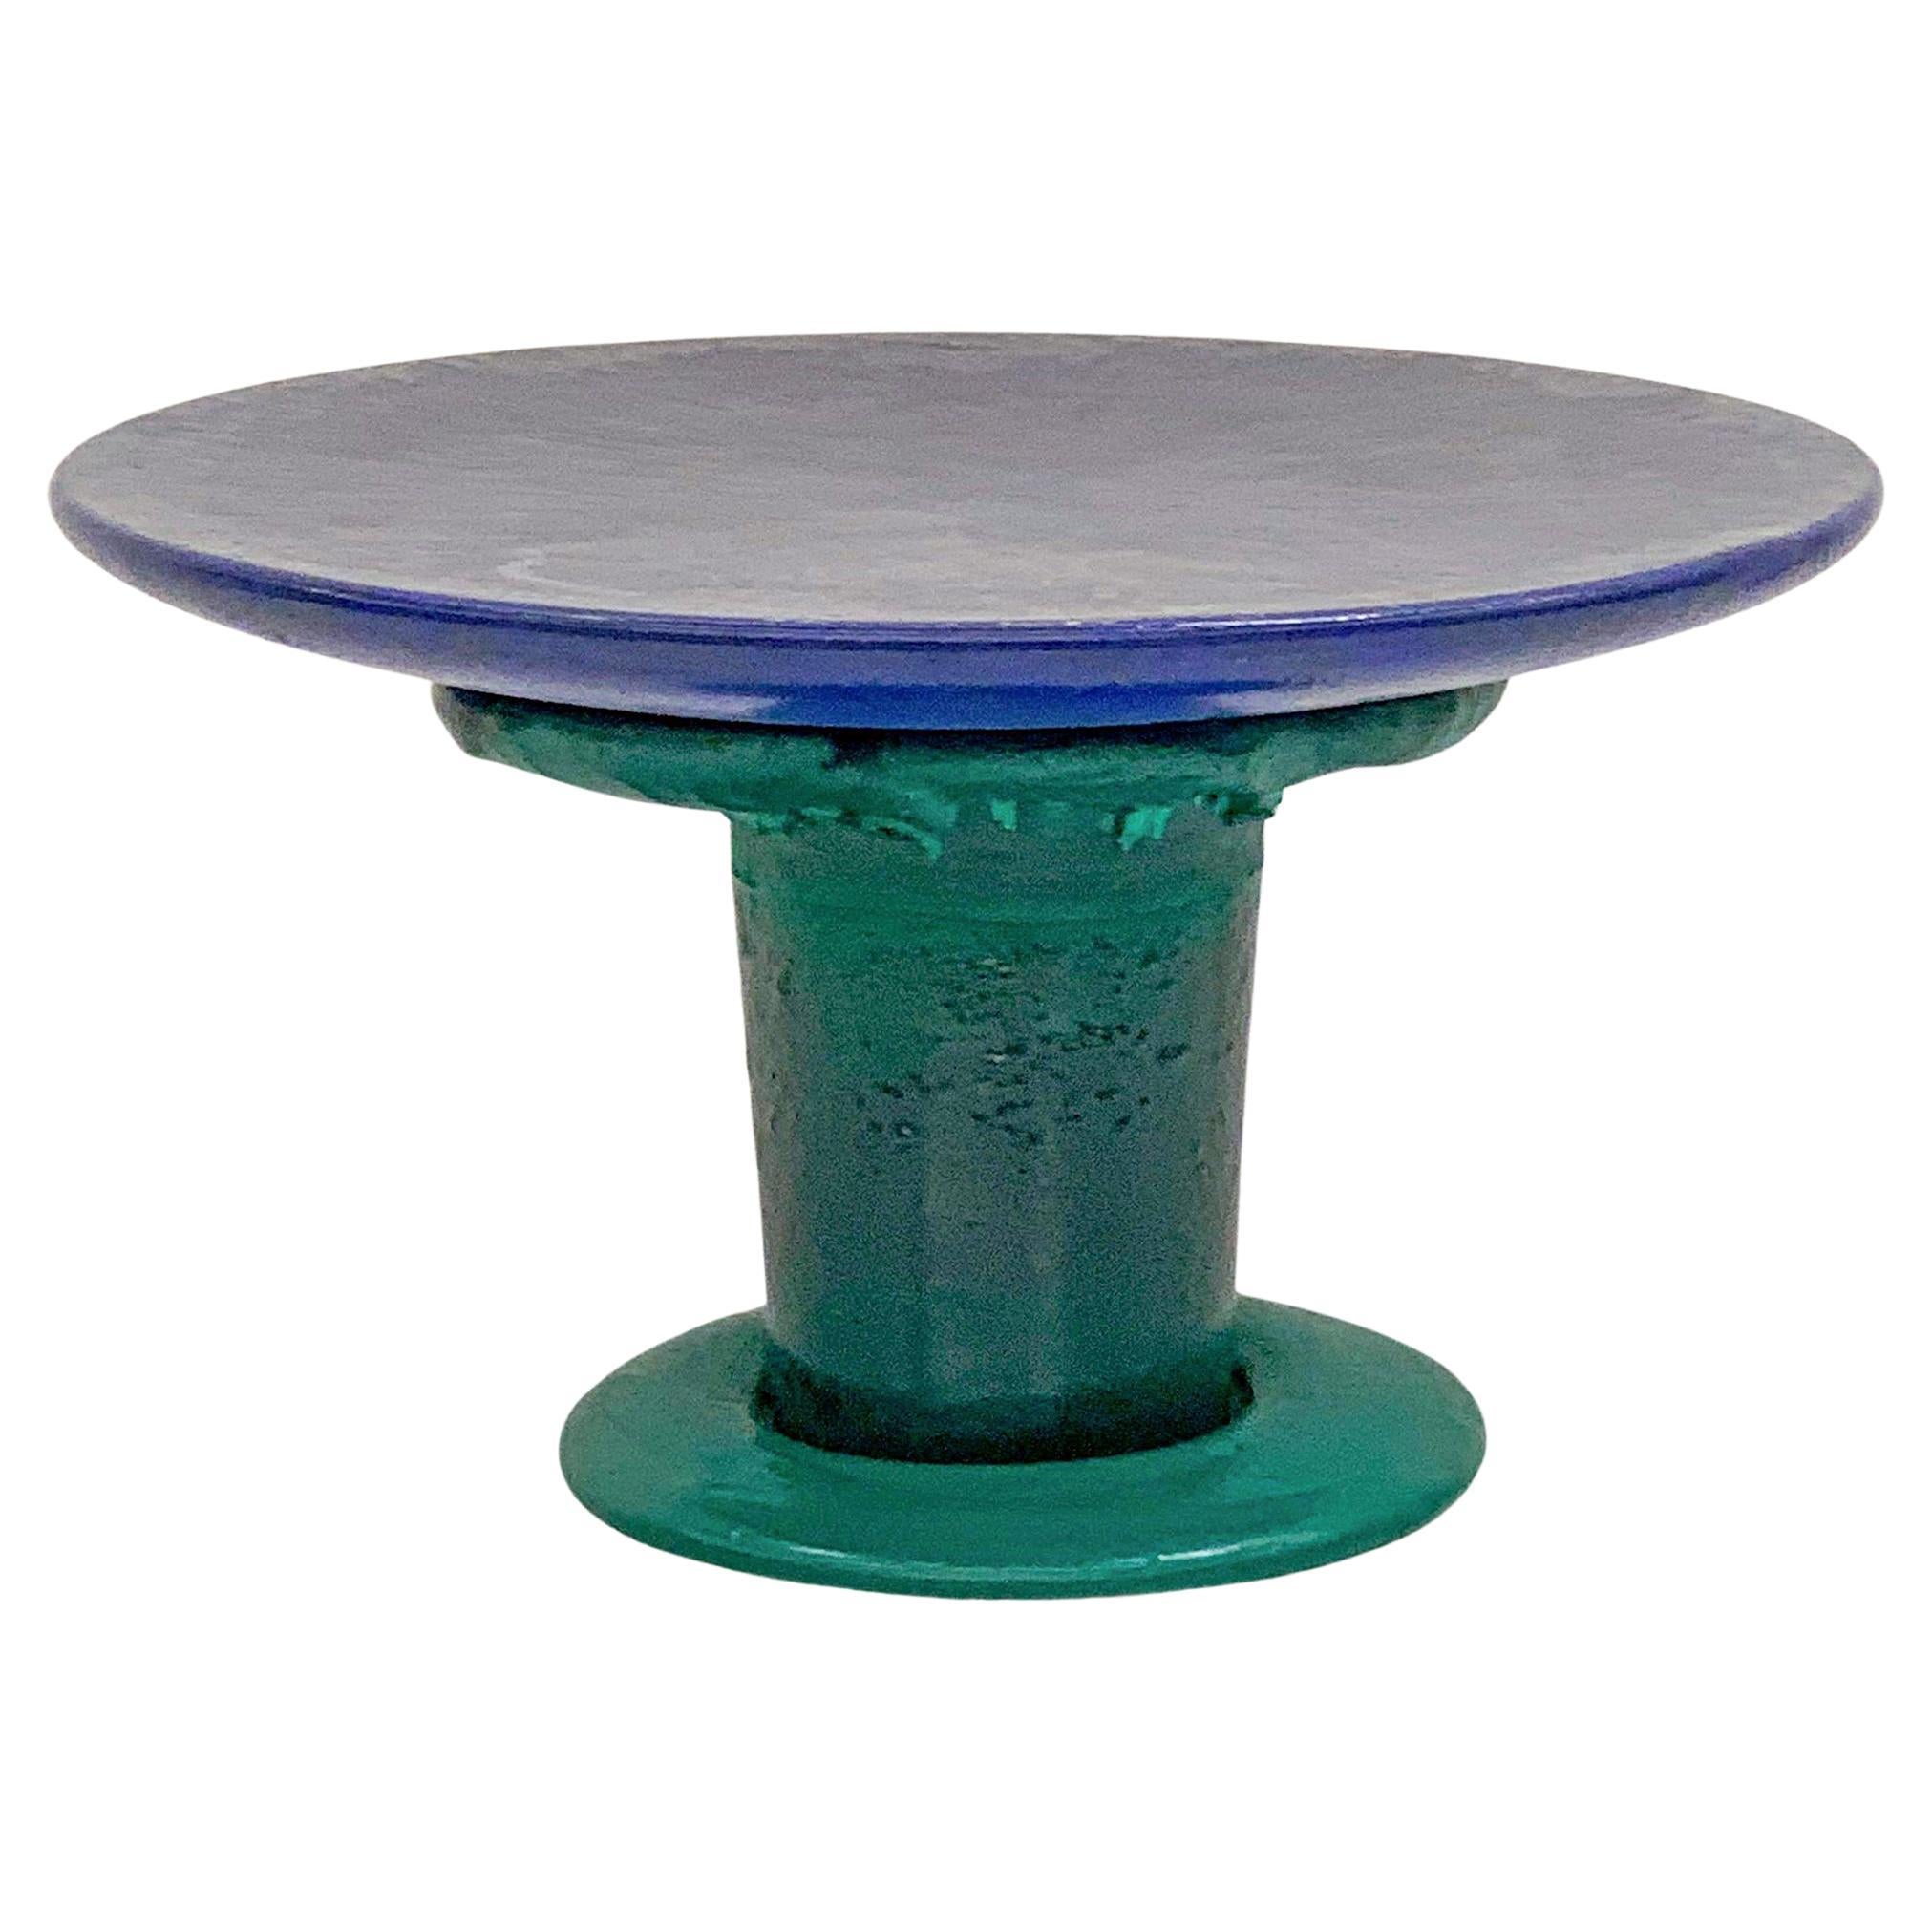 Sunburst Mushroom Table in Green and Blue, Louis Durot, 1990's